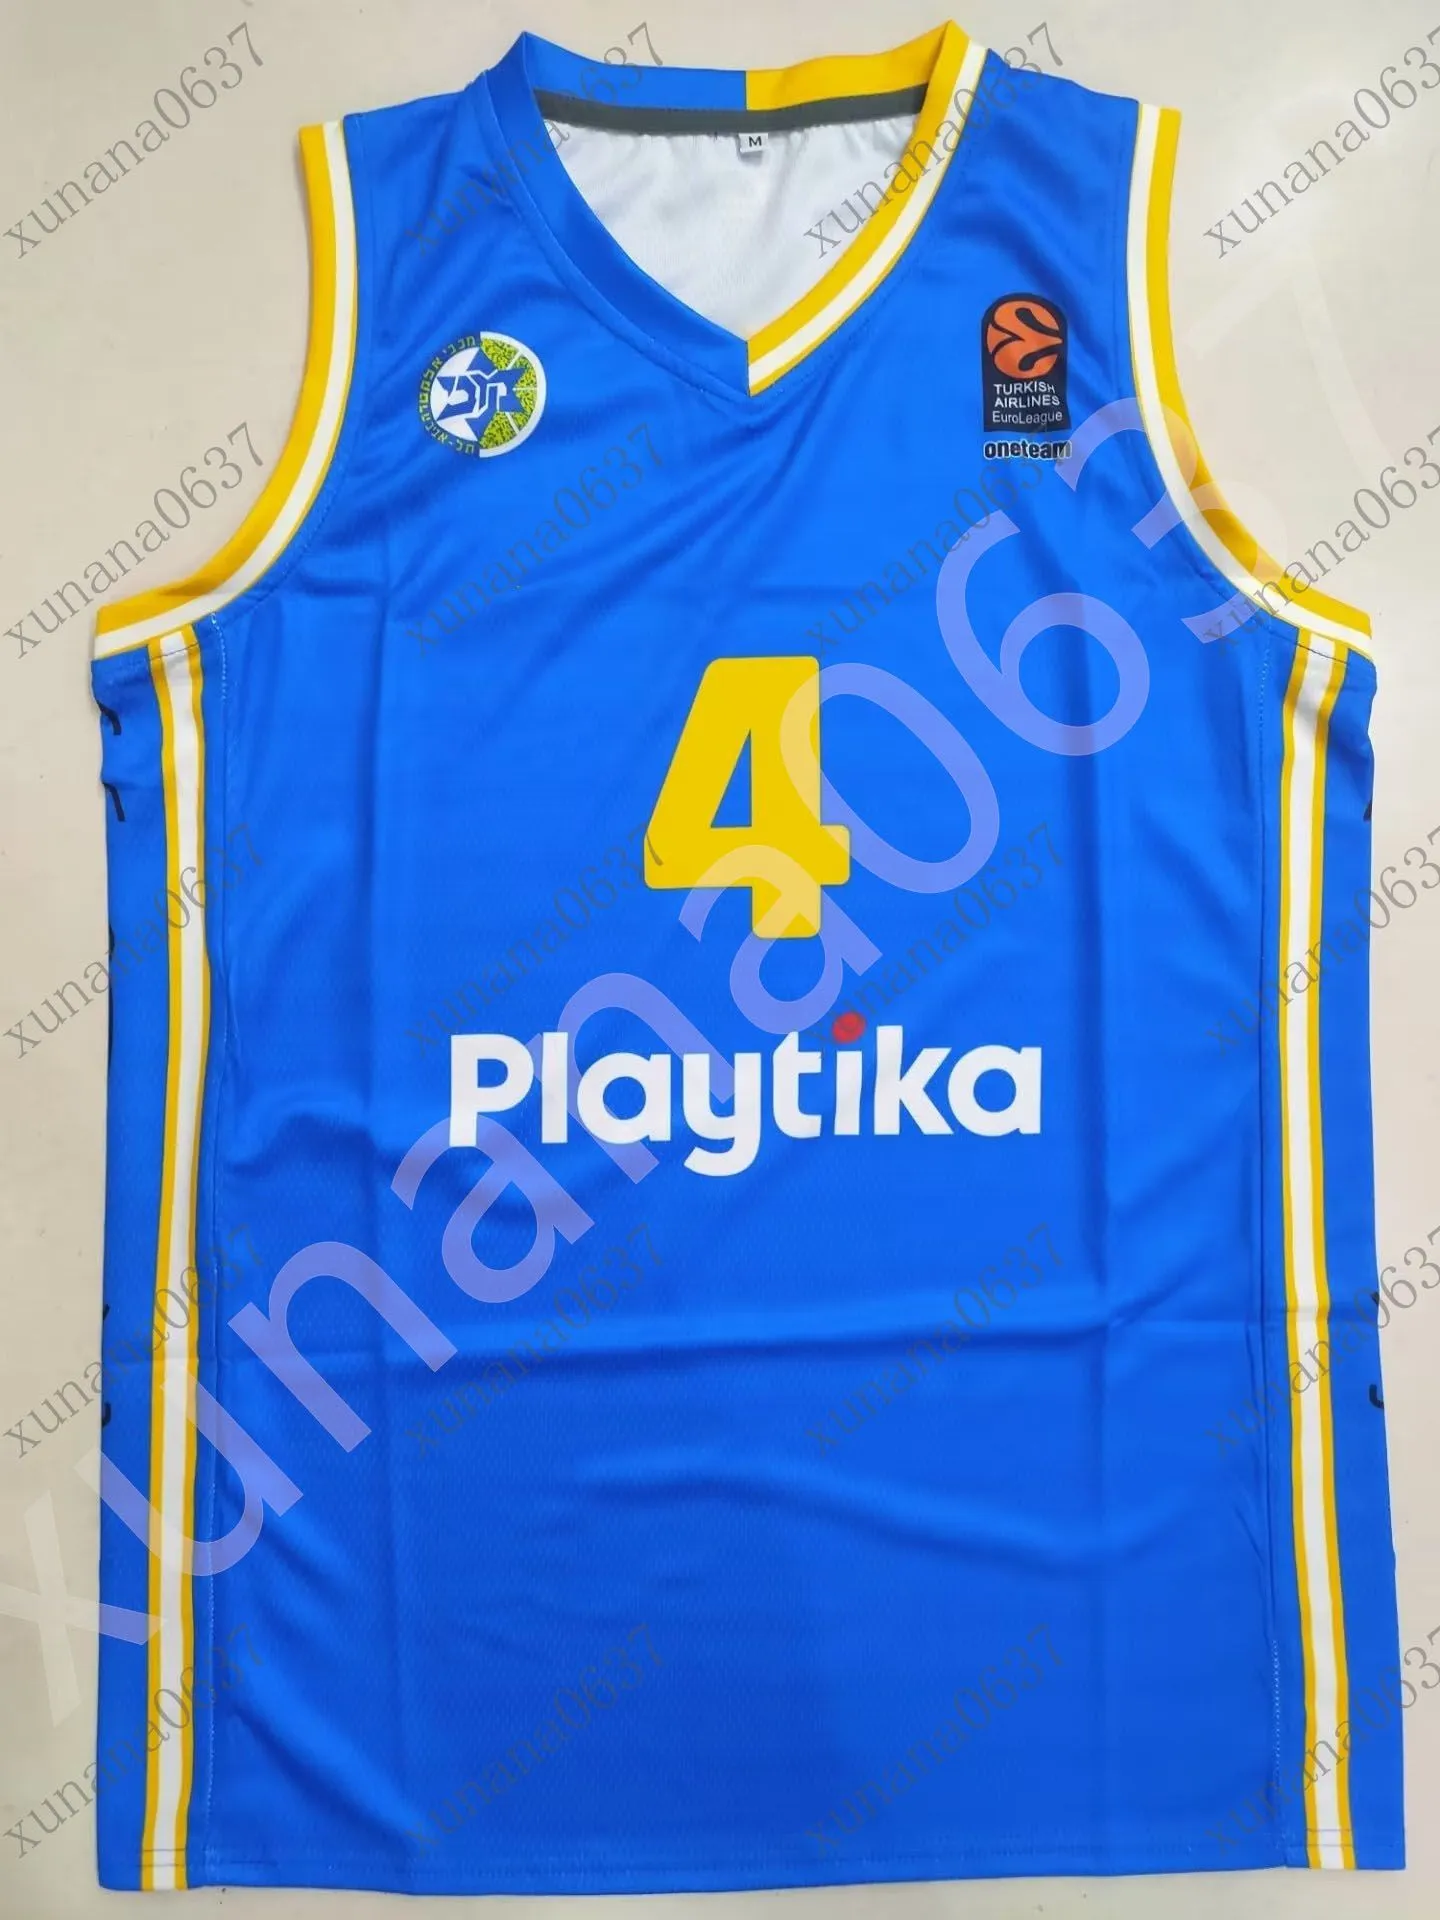 Basketball Jersey Maccabi Playtika Tel Aviv LORENZOBROWN 2022-023 European Season Adult Can be customized